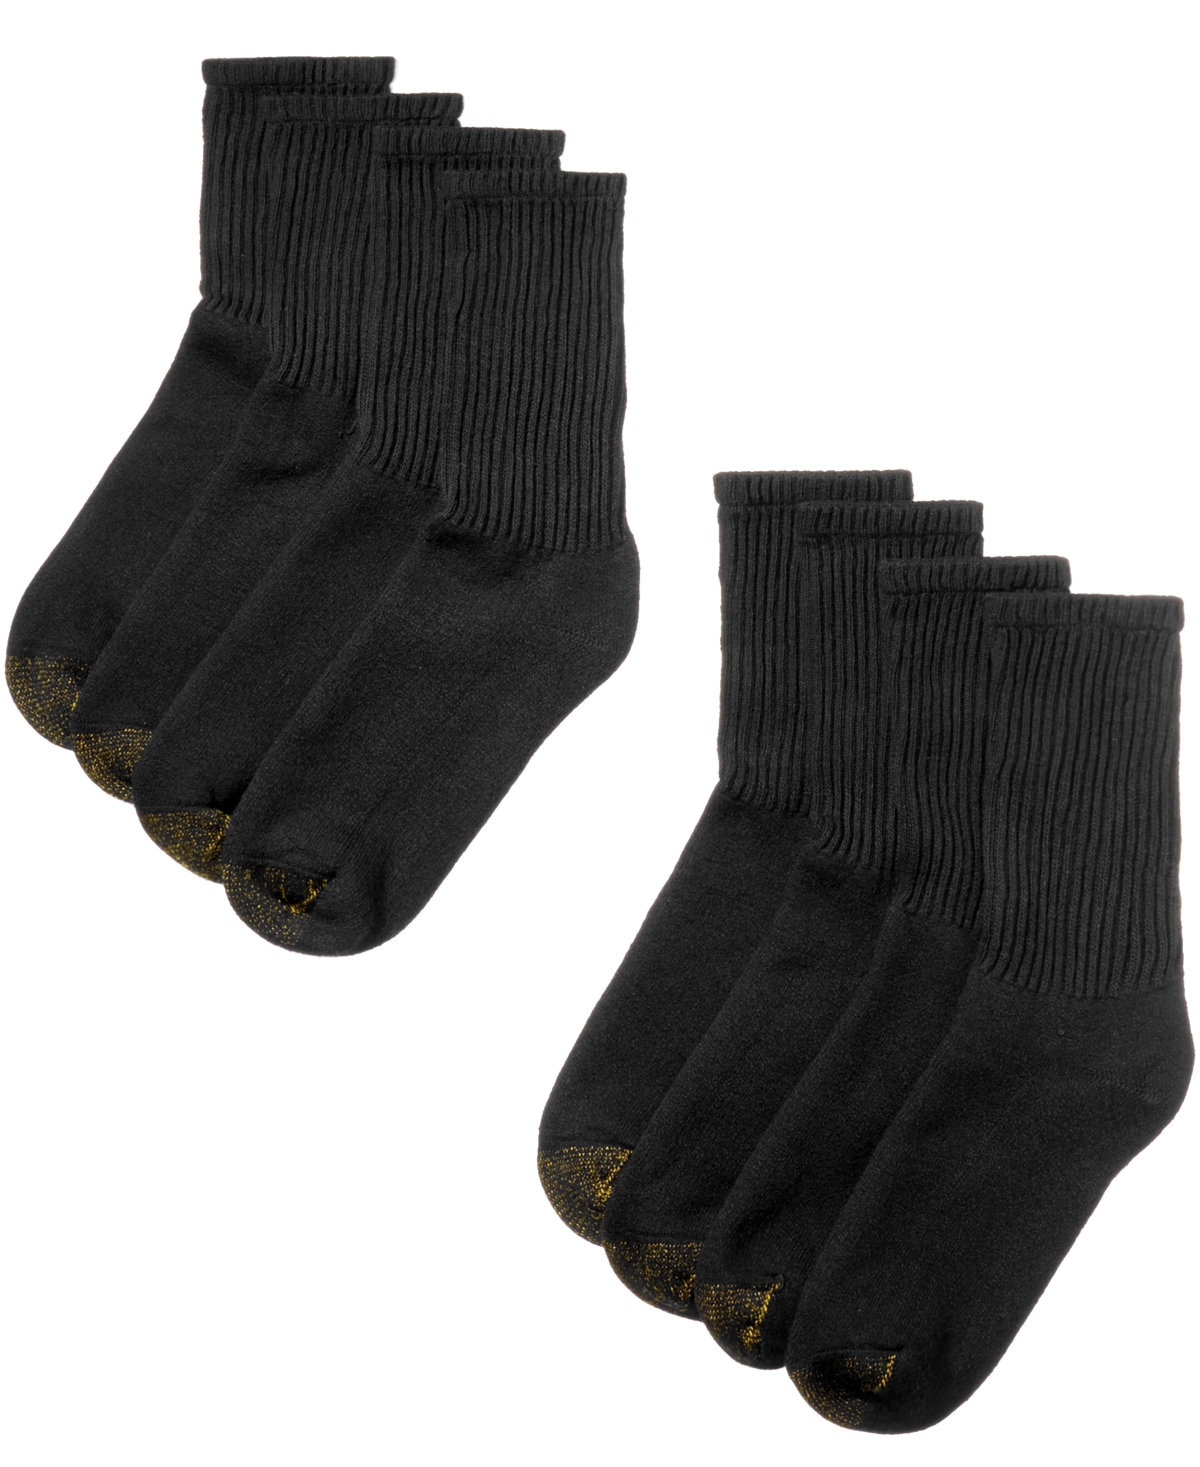 Men's 8 Pack Athletic Crew Socks - Black